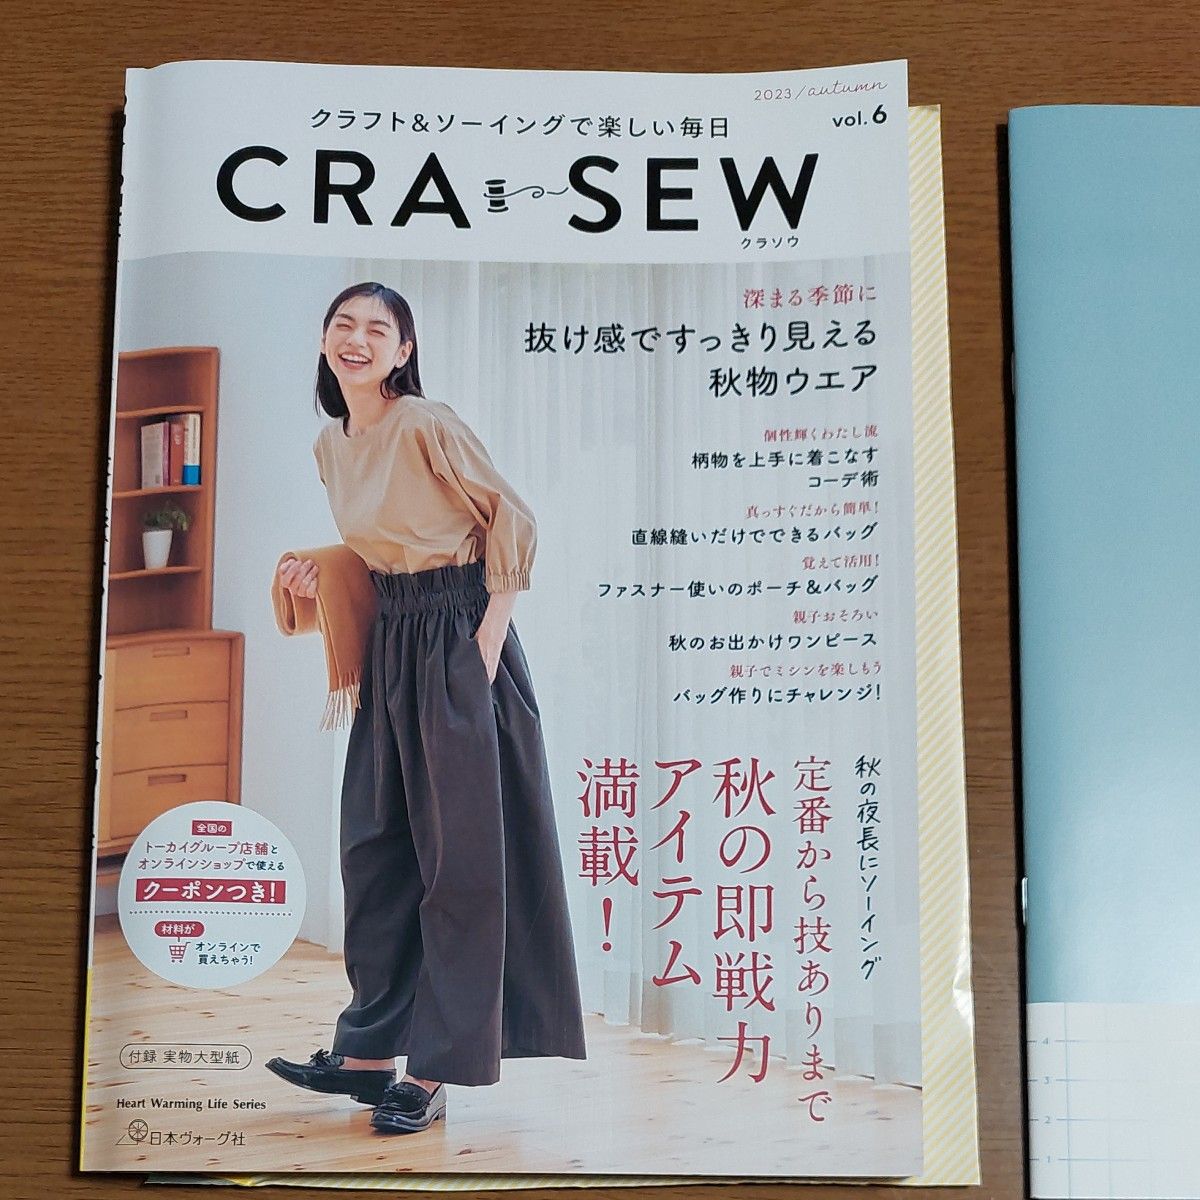 CRA-SEW クラフト&ソーイングで楽しい毎日 vol.6 (2023/autumn) 洋裁 大人のかんたんソーイング